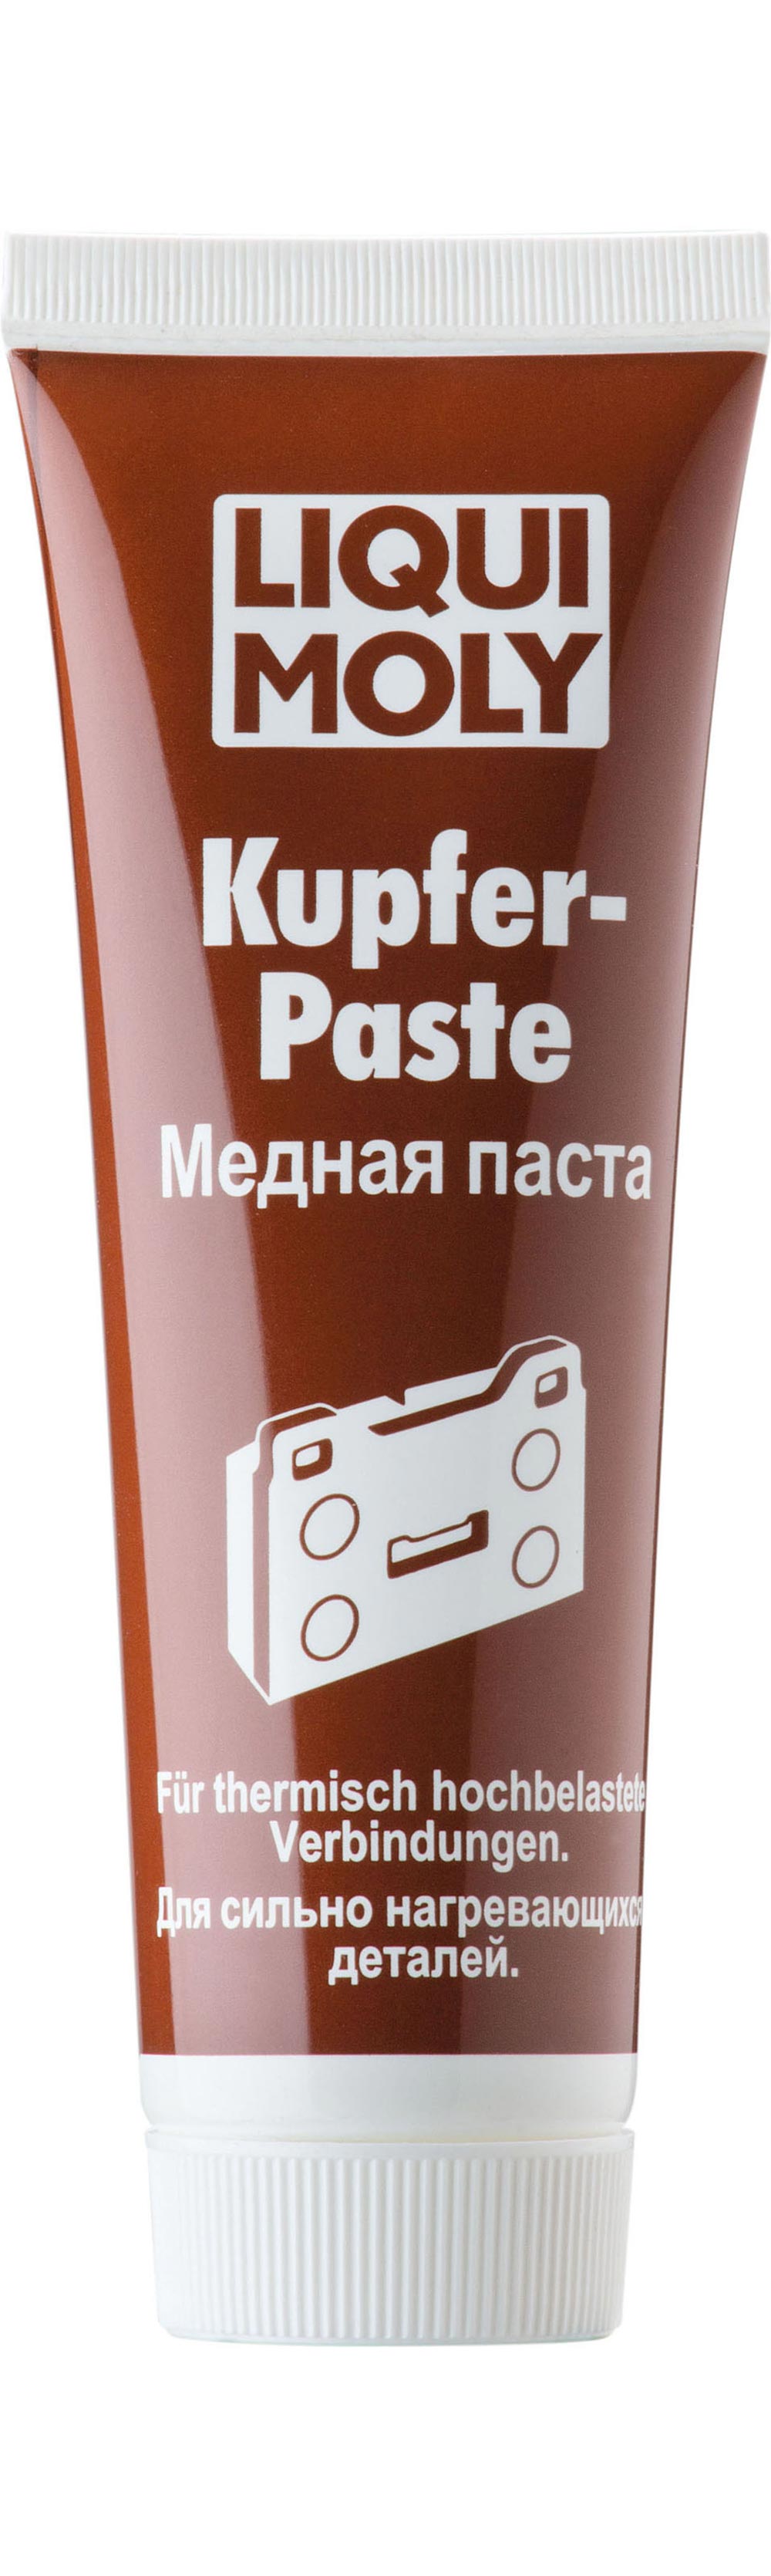 Медная паста Kupfer-Paste 0.1кг